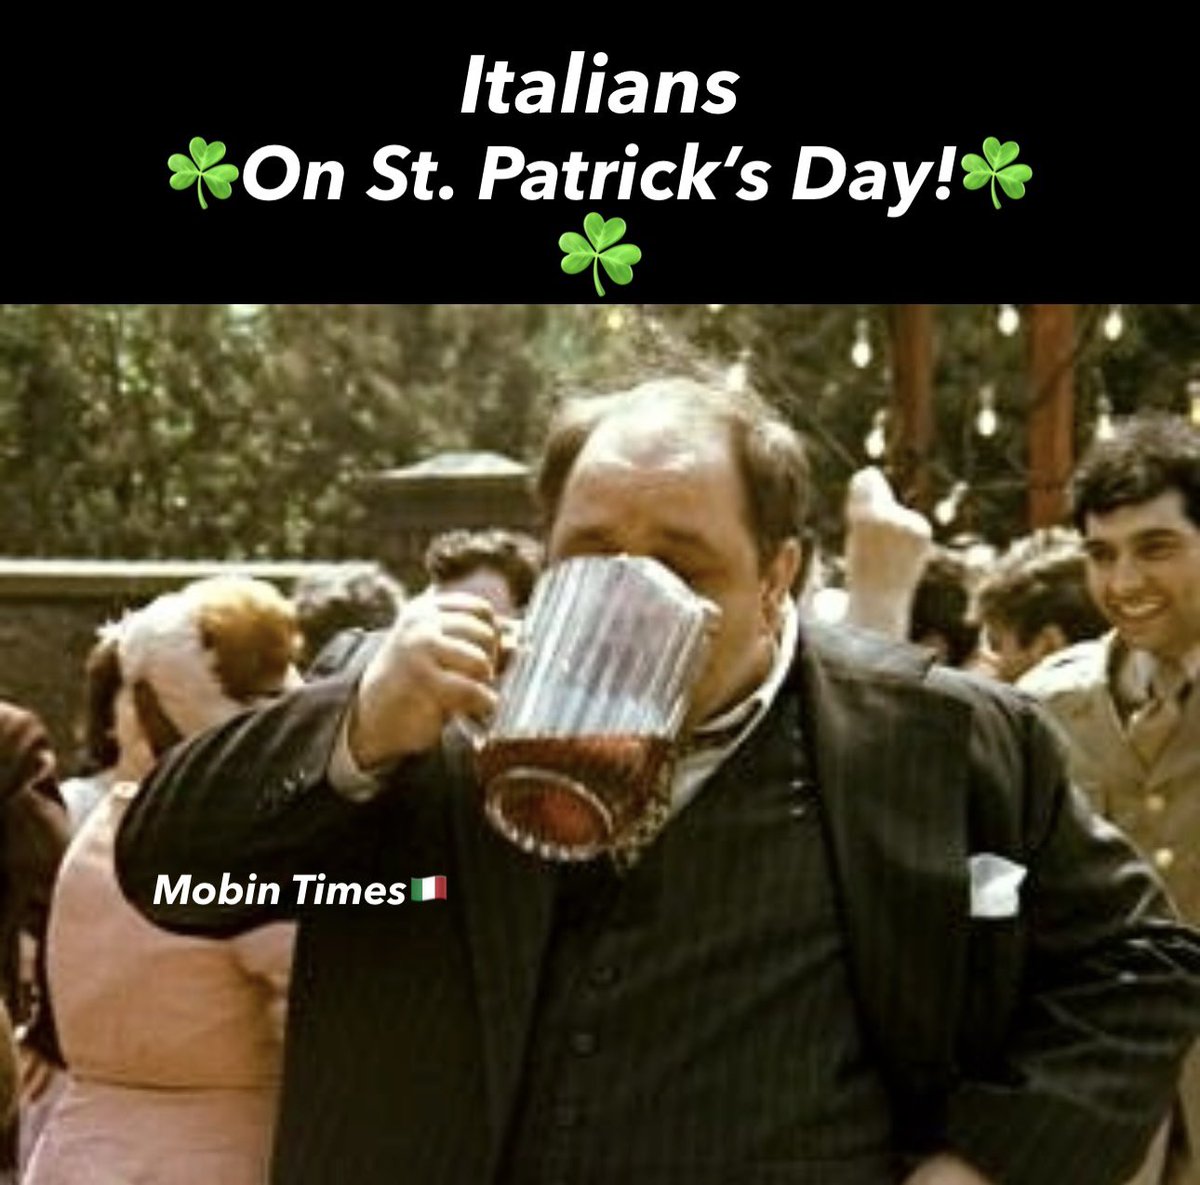 Bottoms up!☘️🇮🇪🍺🥃🇮🇹🍷 #MobinTimes
#StayMobin #MT #Mobin #SaintPatricksDay #StPattysDay #Drink #StPatricksDay #Drunk #Mob #Mafia #Gangster #Wiseguys #OC #Omerta #Italian #Irish #MobinTimesOriginal #TheGodfather #Clemenza #Like #Share #Follow #Comment #Tag #Repost #Retweet